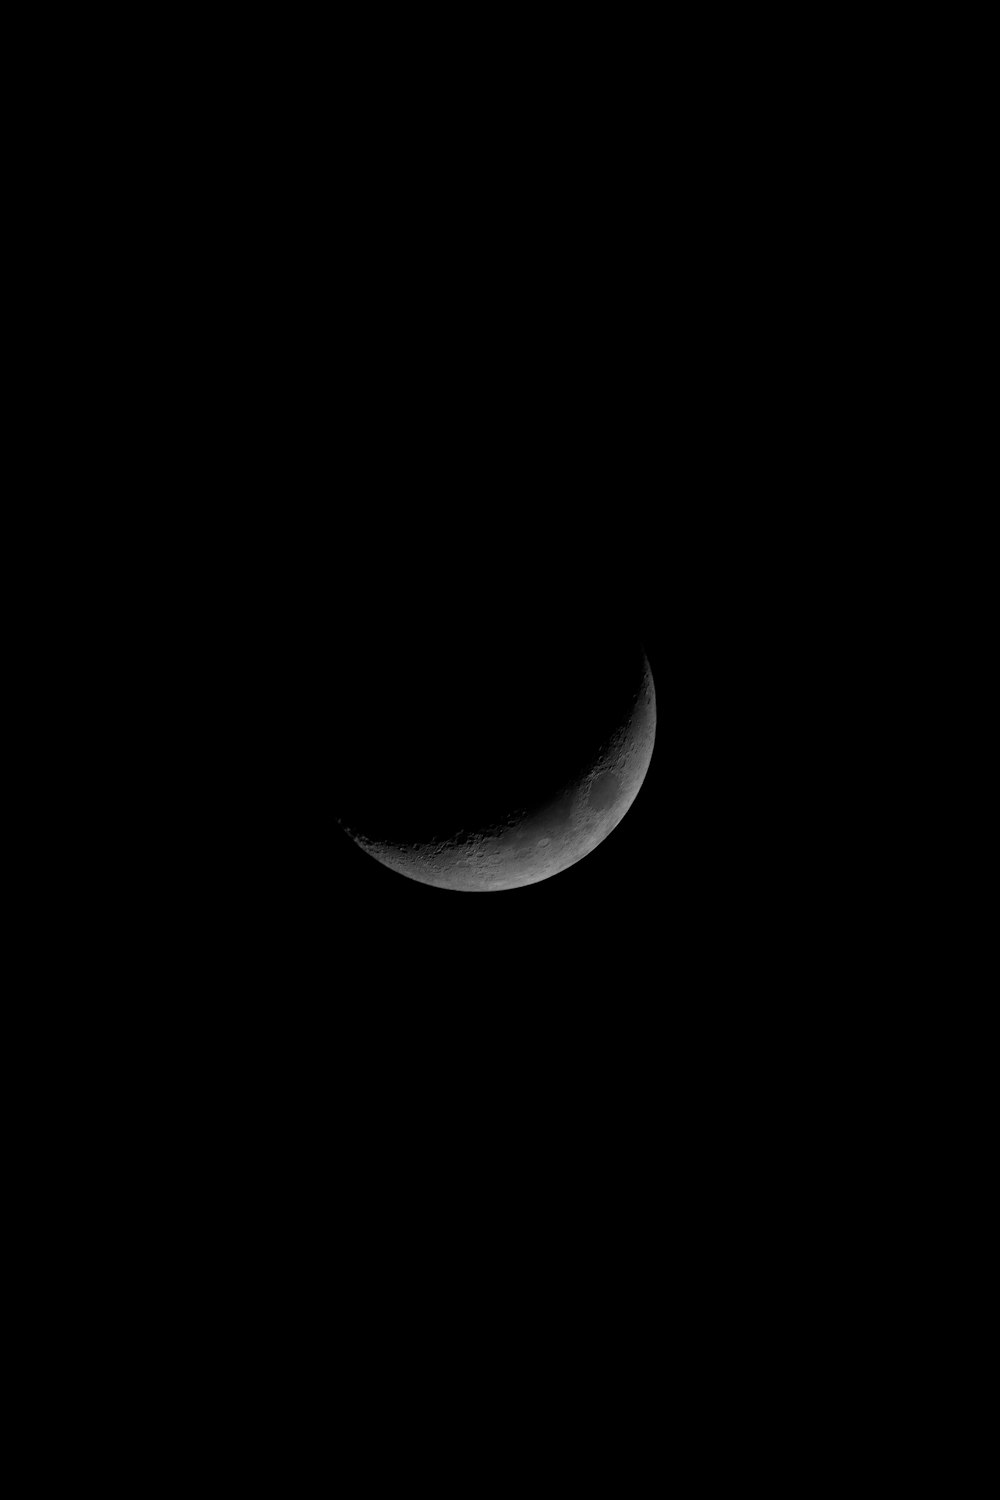 a crescent moon is seen in the dark sky